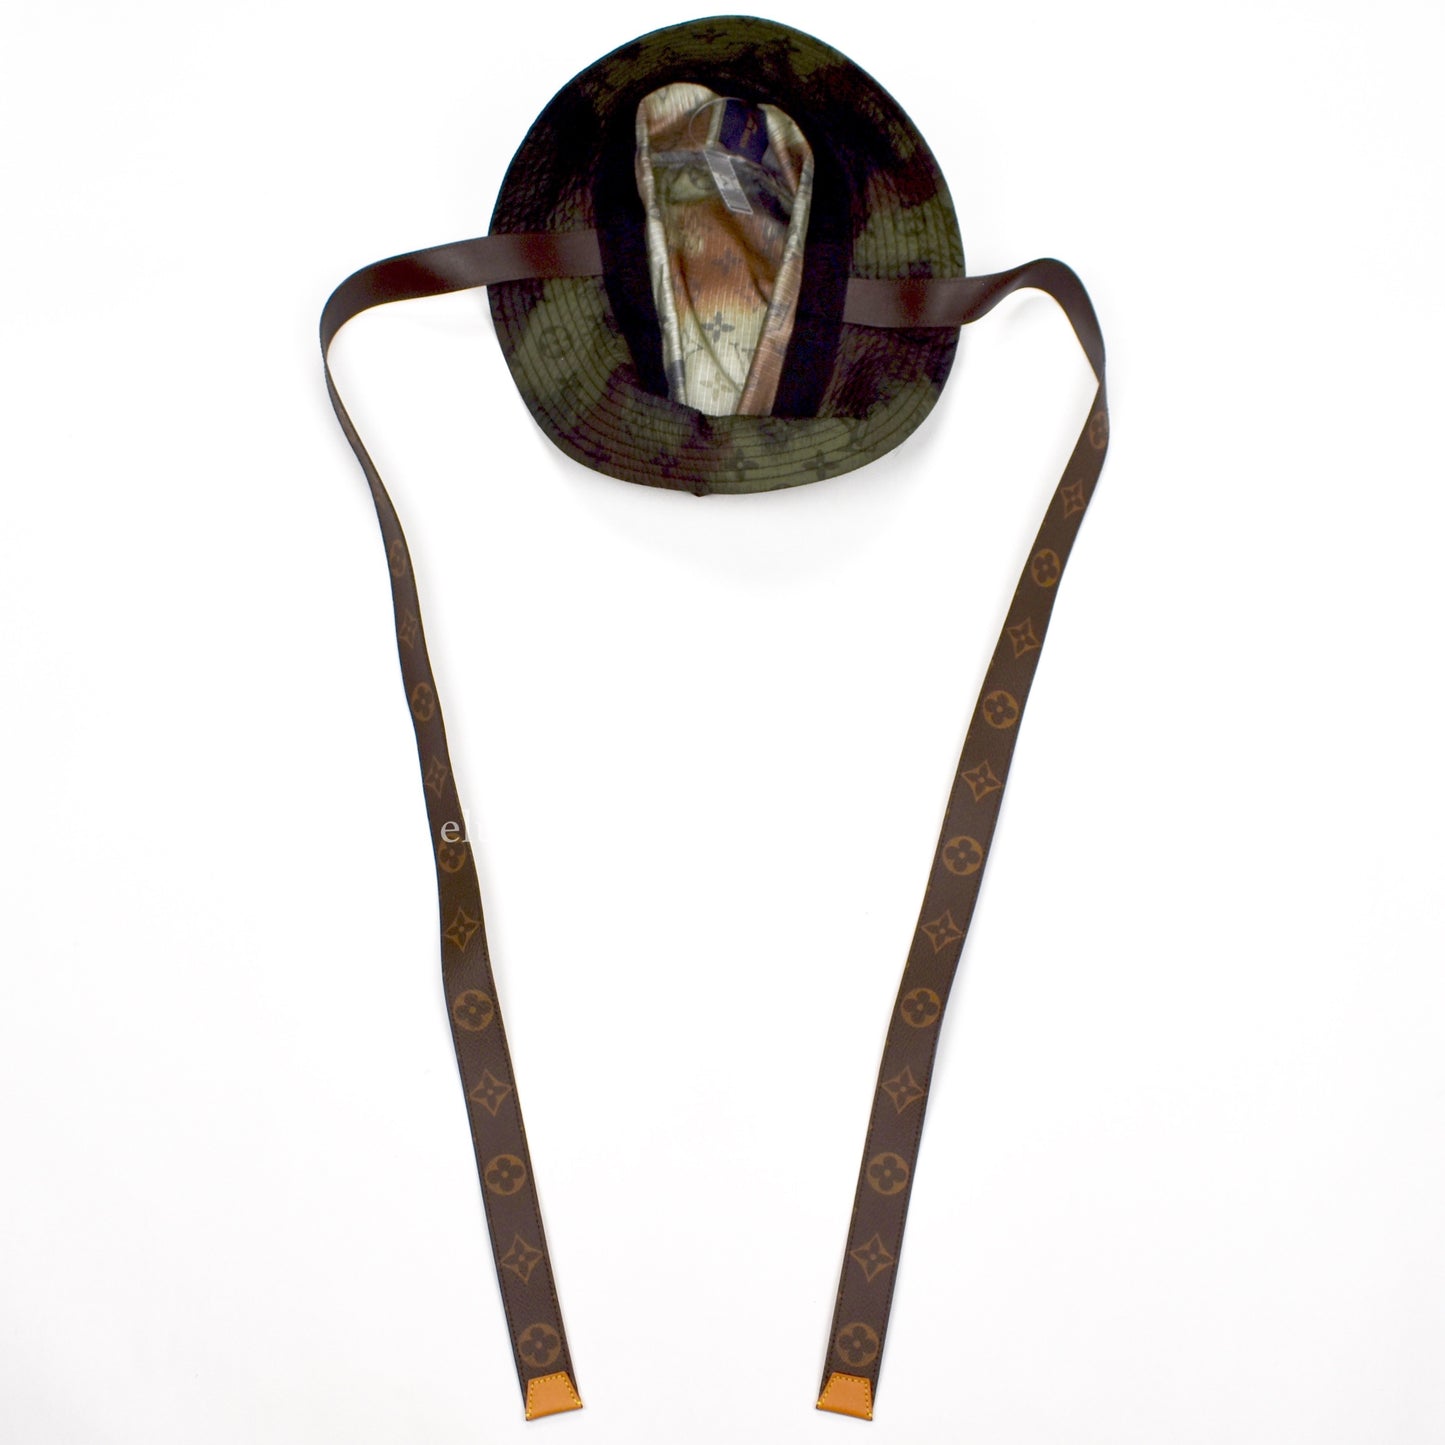 Louis Vuitton - Monogram Ikat Bucket Hat with Straps